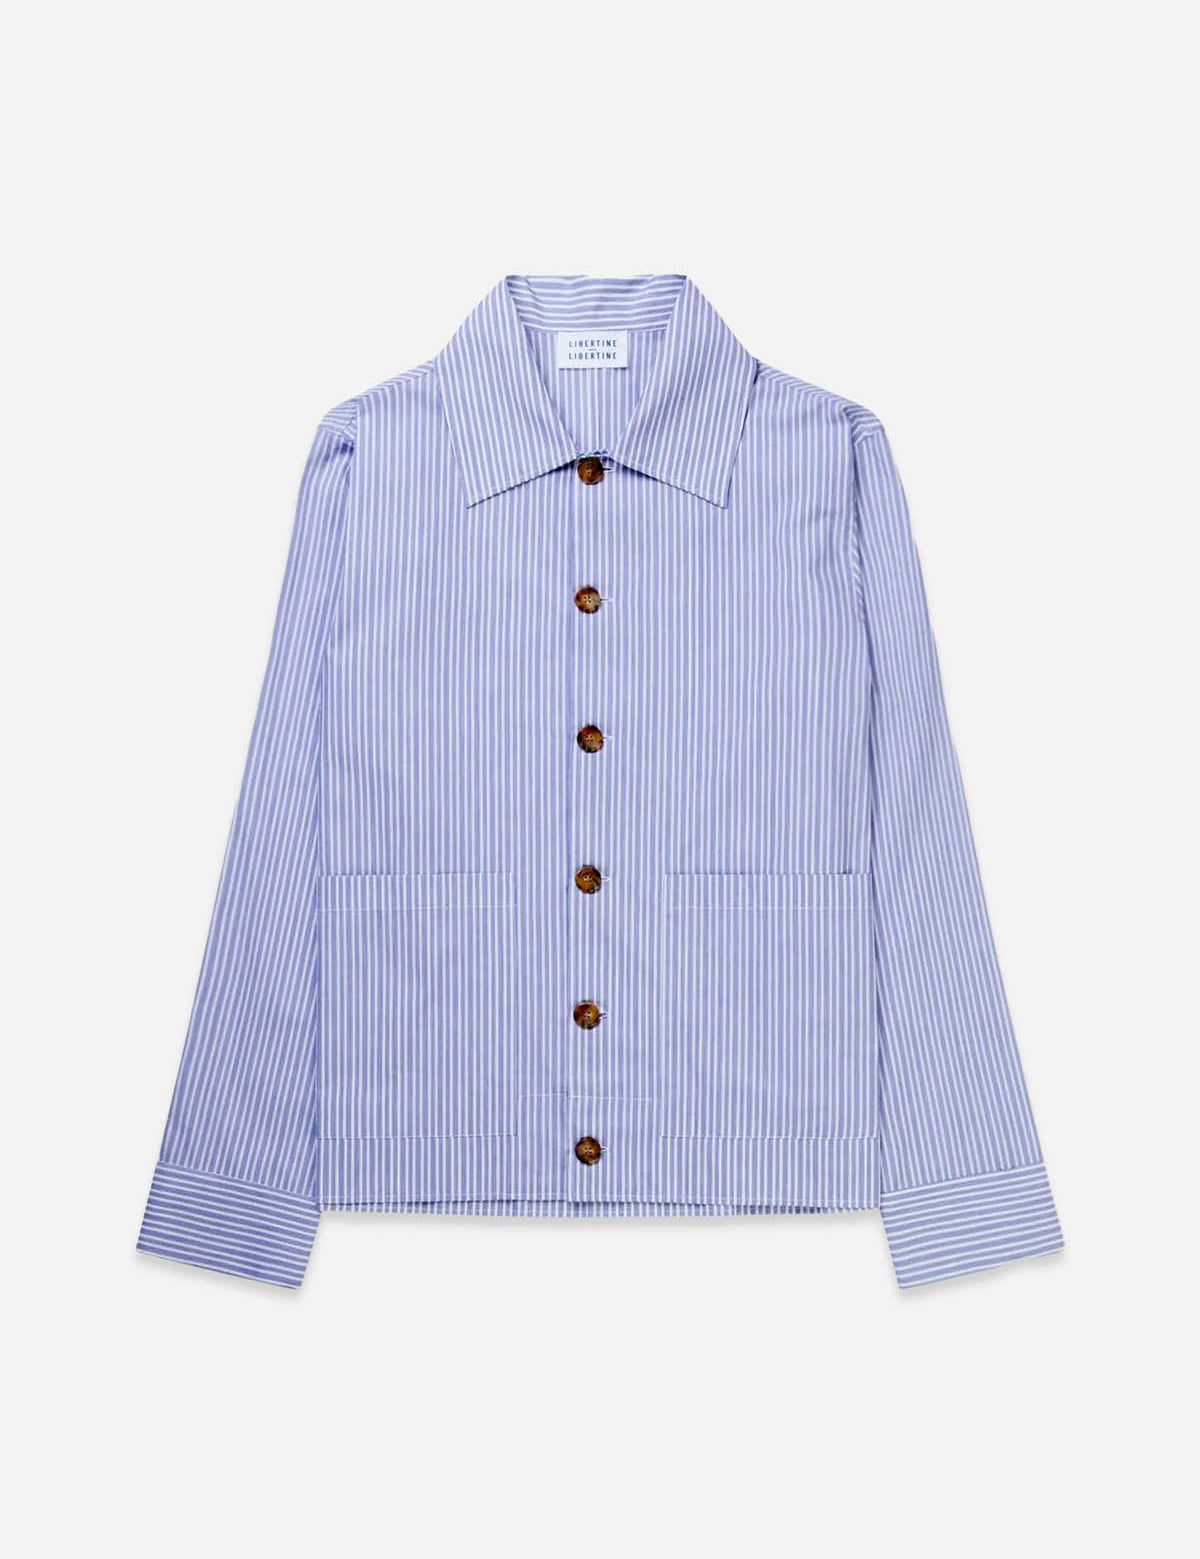 Spider Shirt - Blue Pin Striped - Libertine-Libertine - Kul og Koks